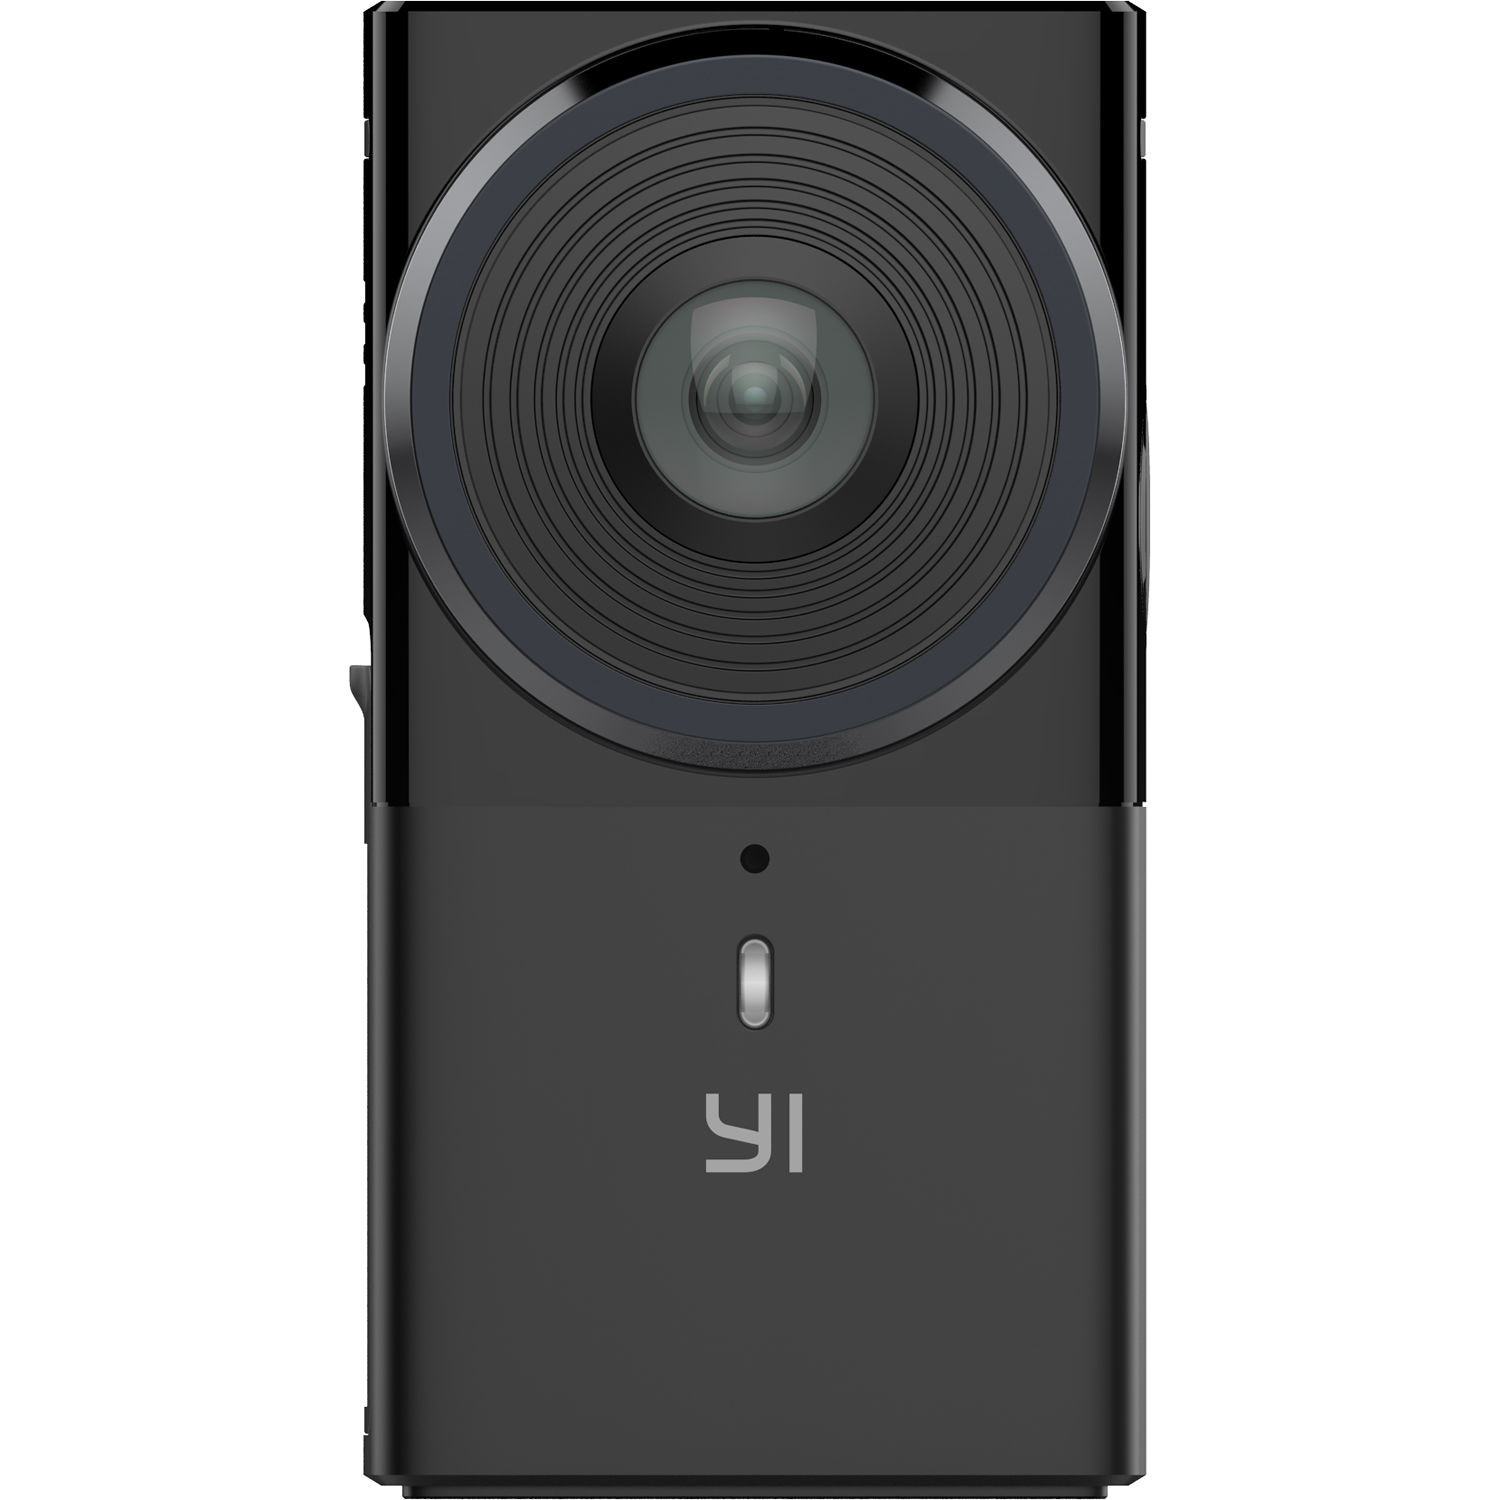 EU | YI 360 VR Black-Ofertas online